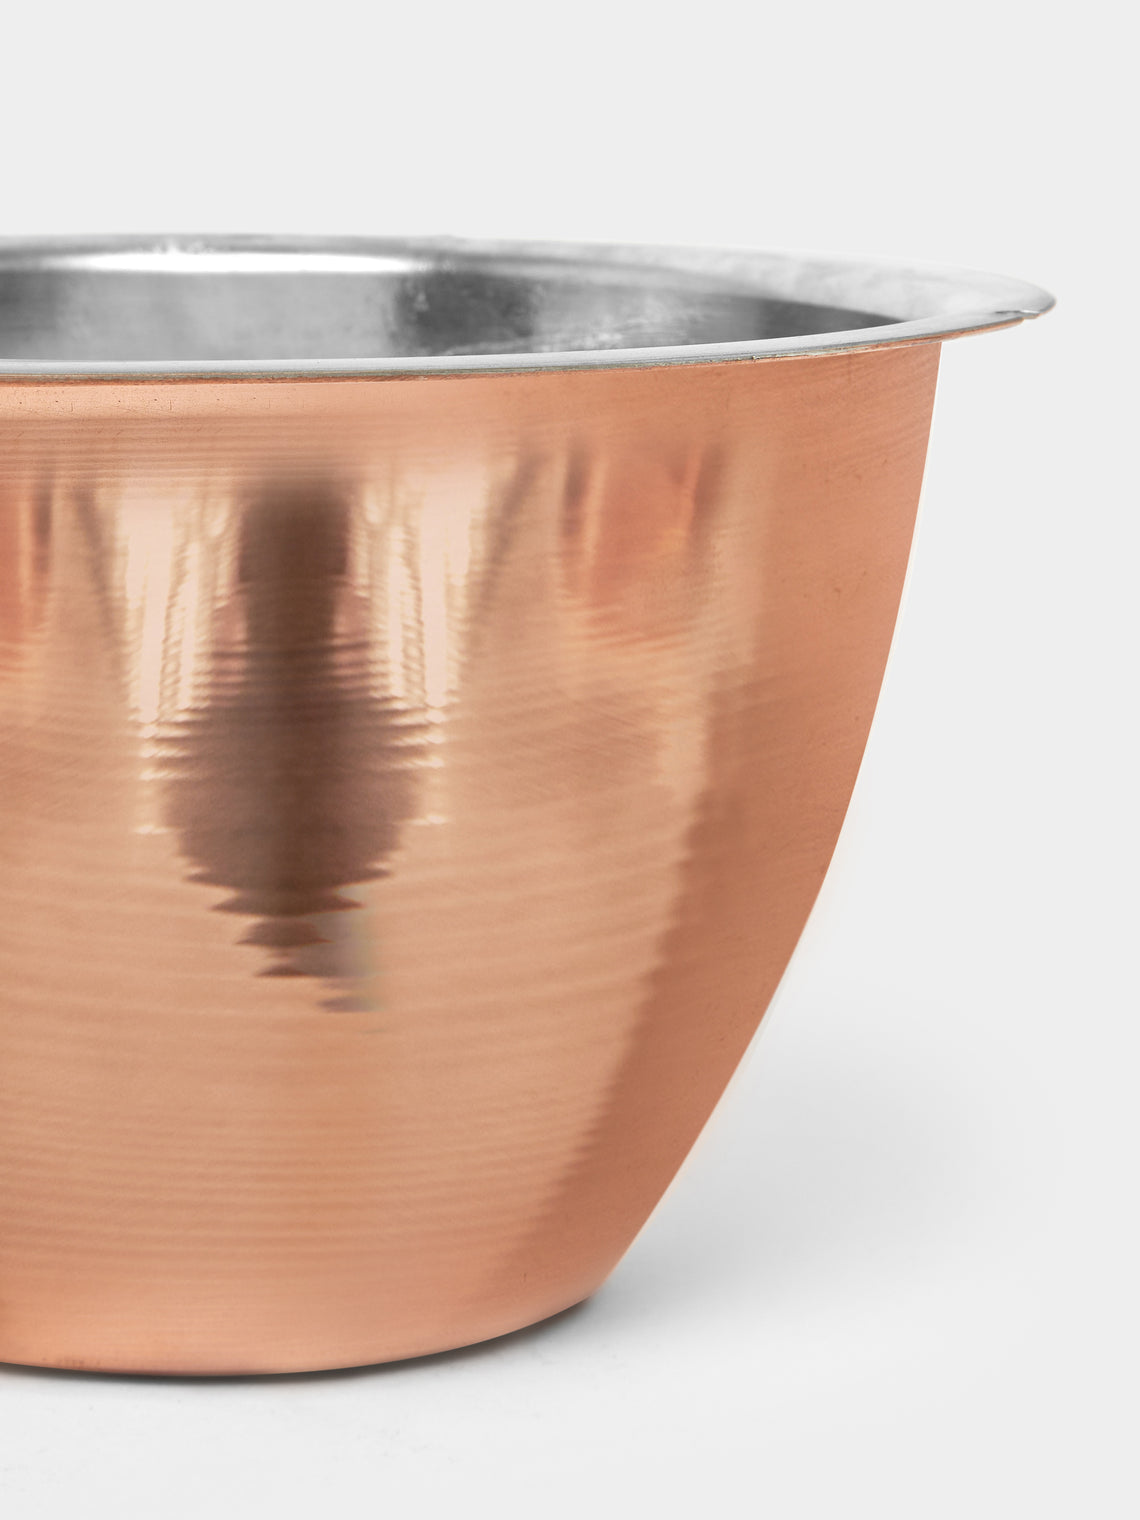 Netherton Foundry - Copper Pudding Pot -  - ABASK